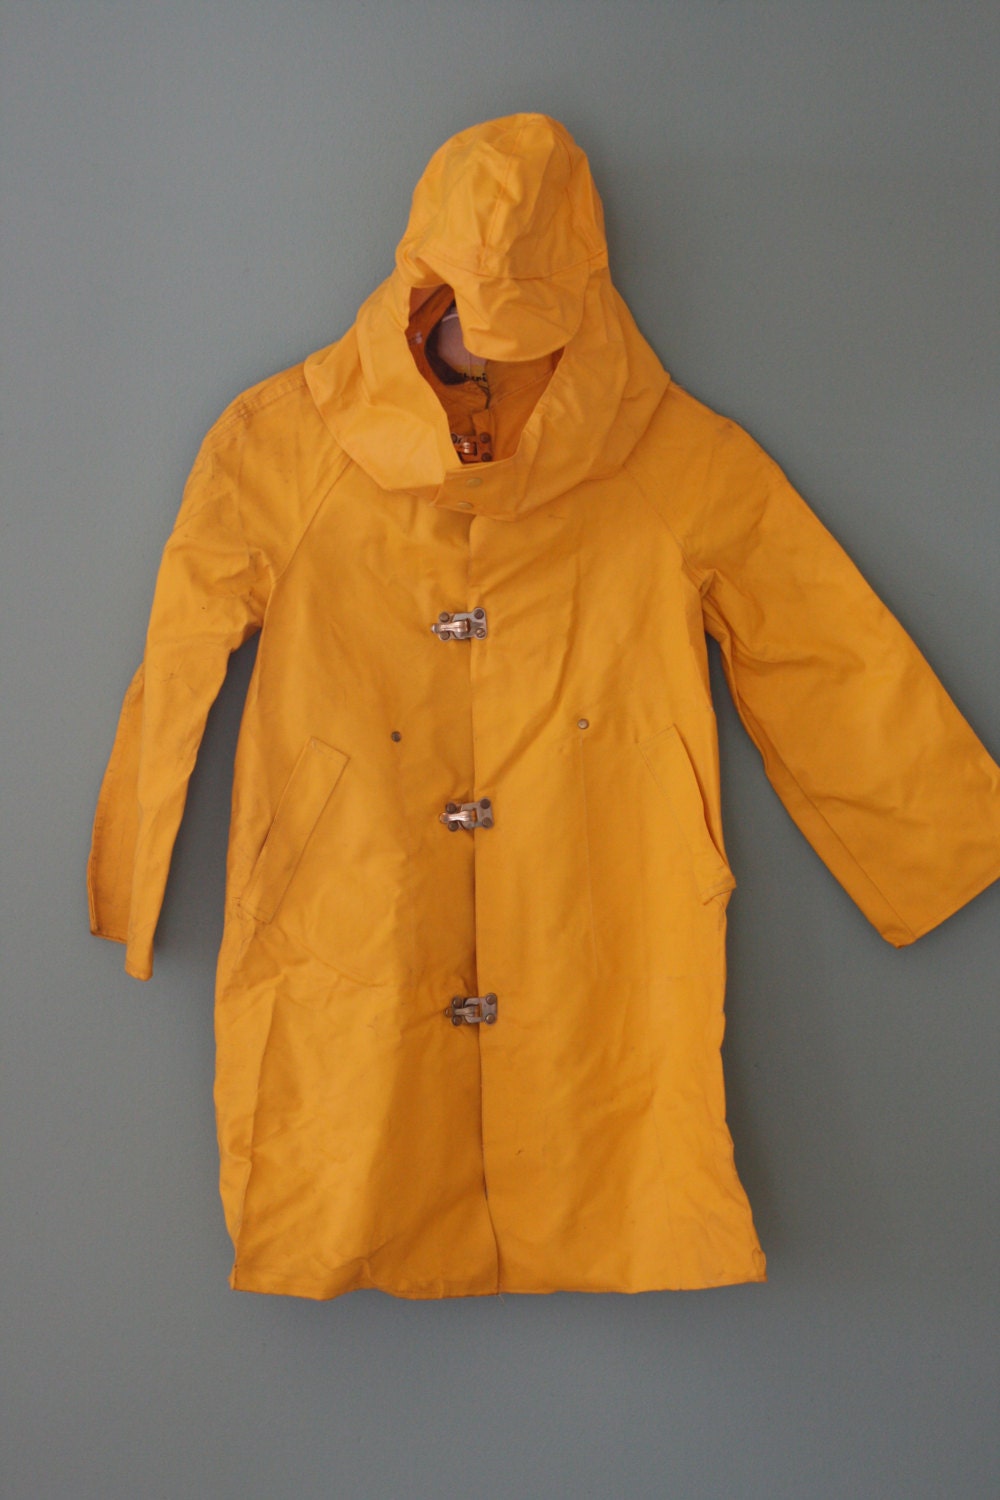 Vintage Yellow Weatherite Rain Coat For Kids